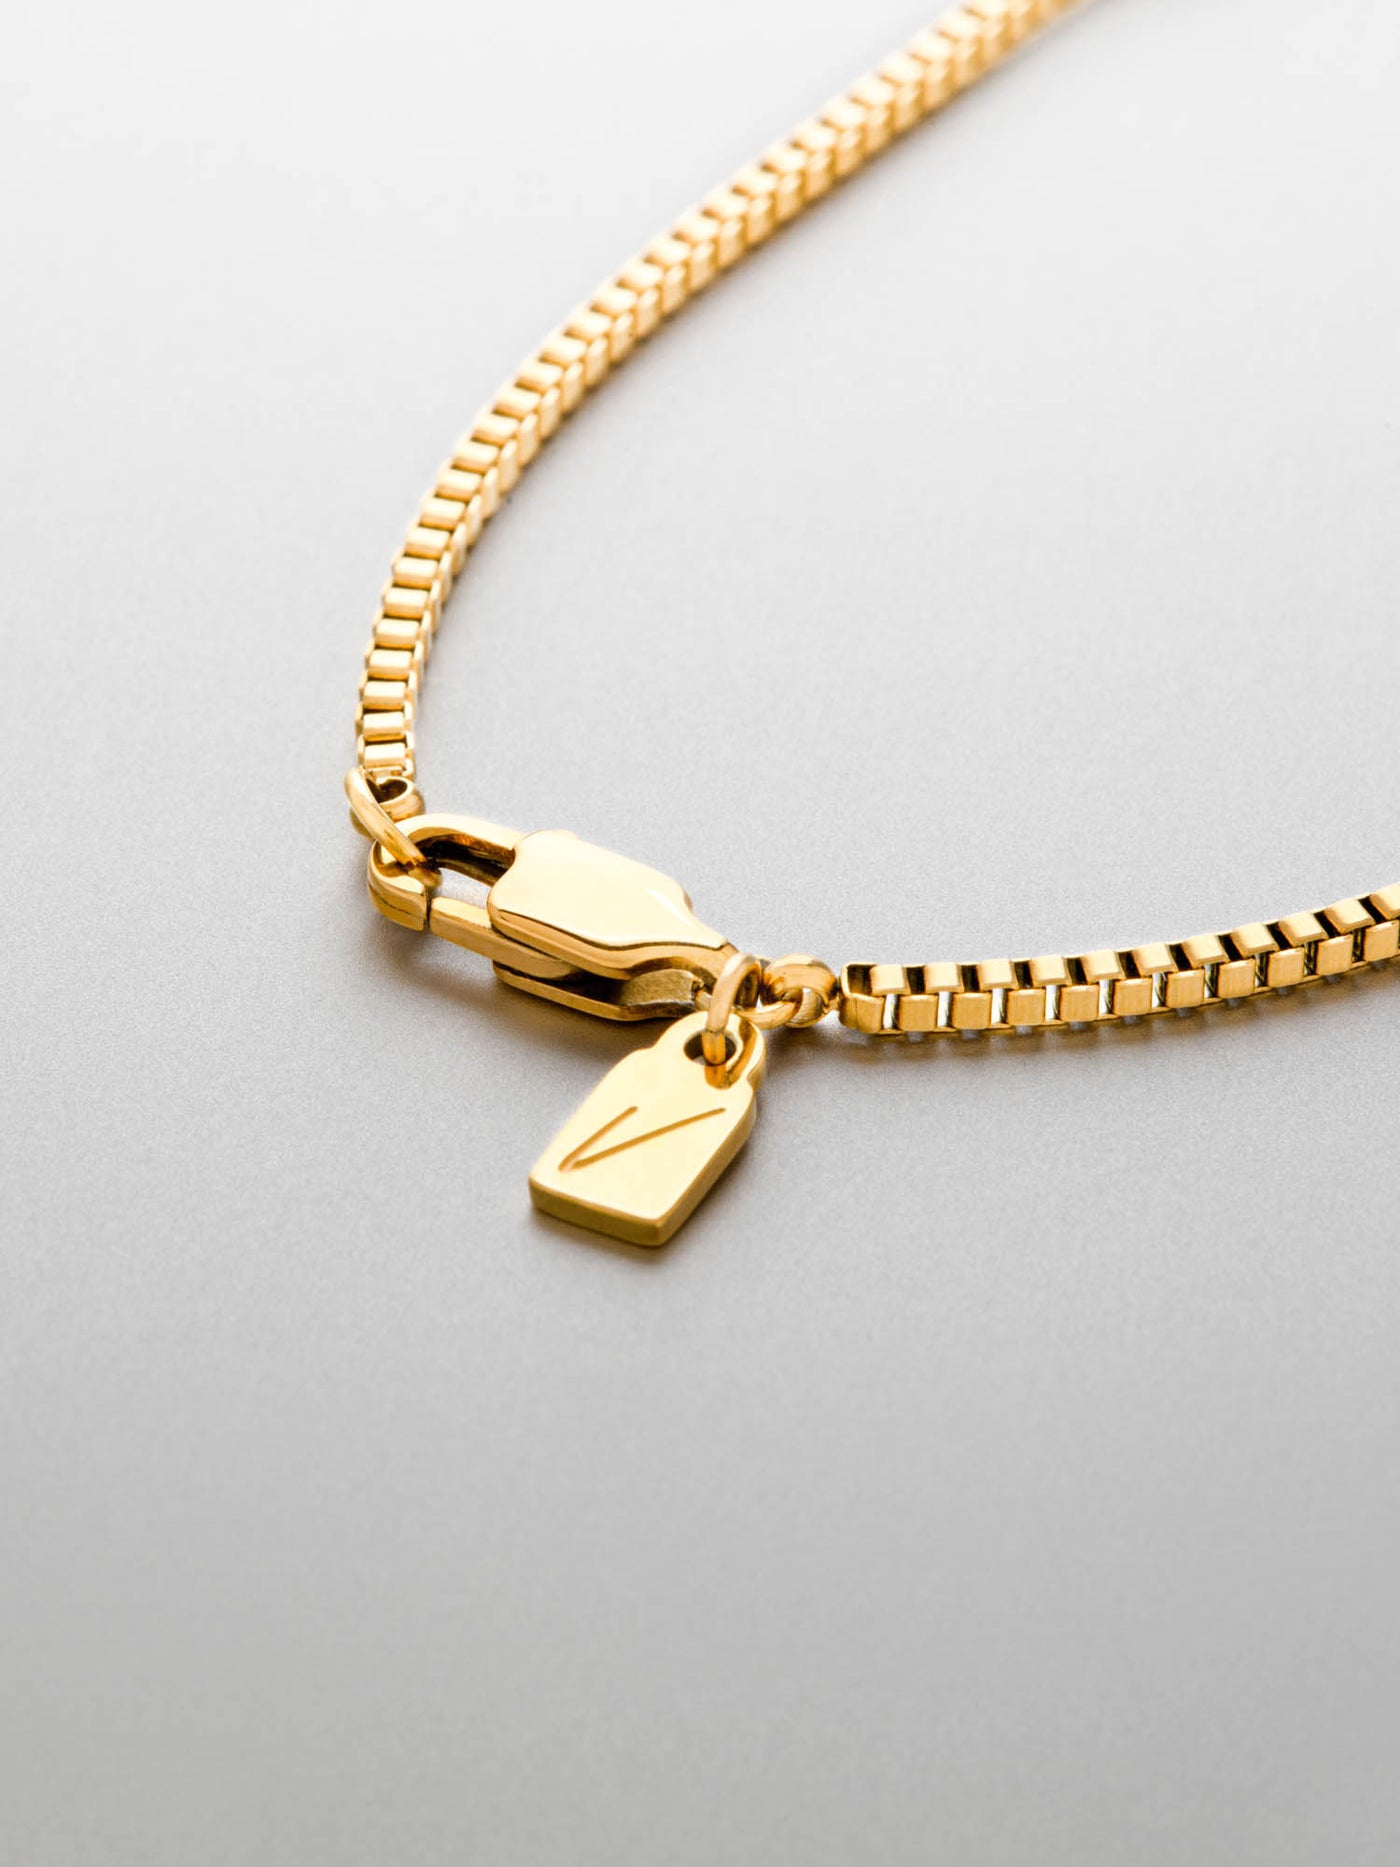 Zoë Chicco 14k Gold Small Box Chain Necklace – ZOË CHICCO